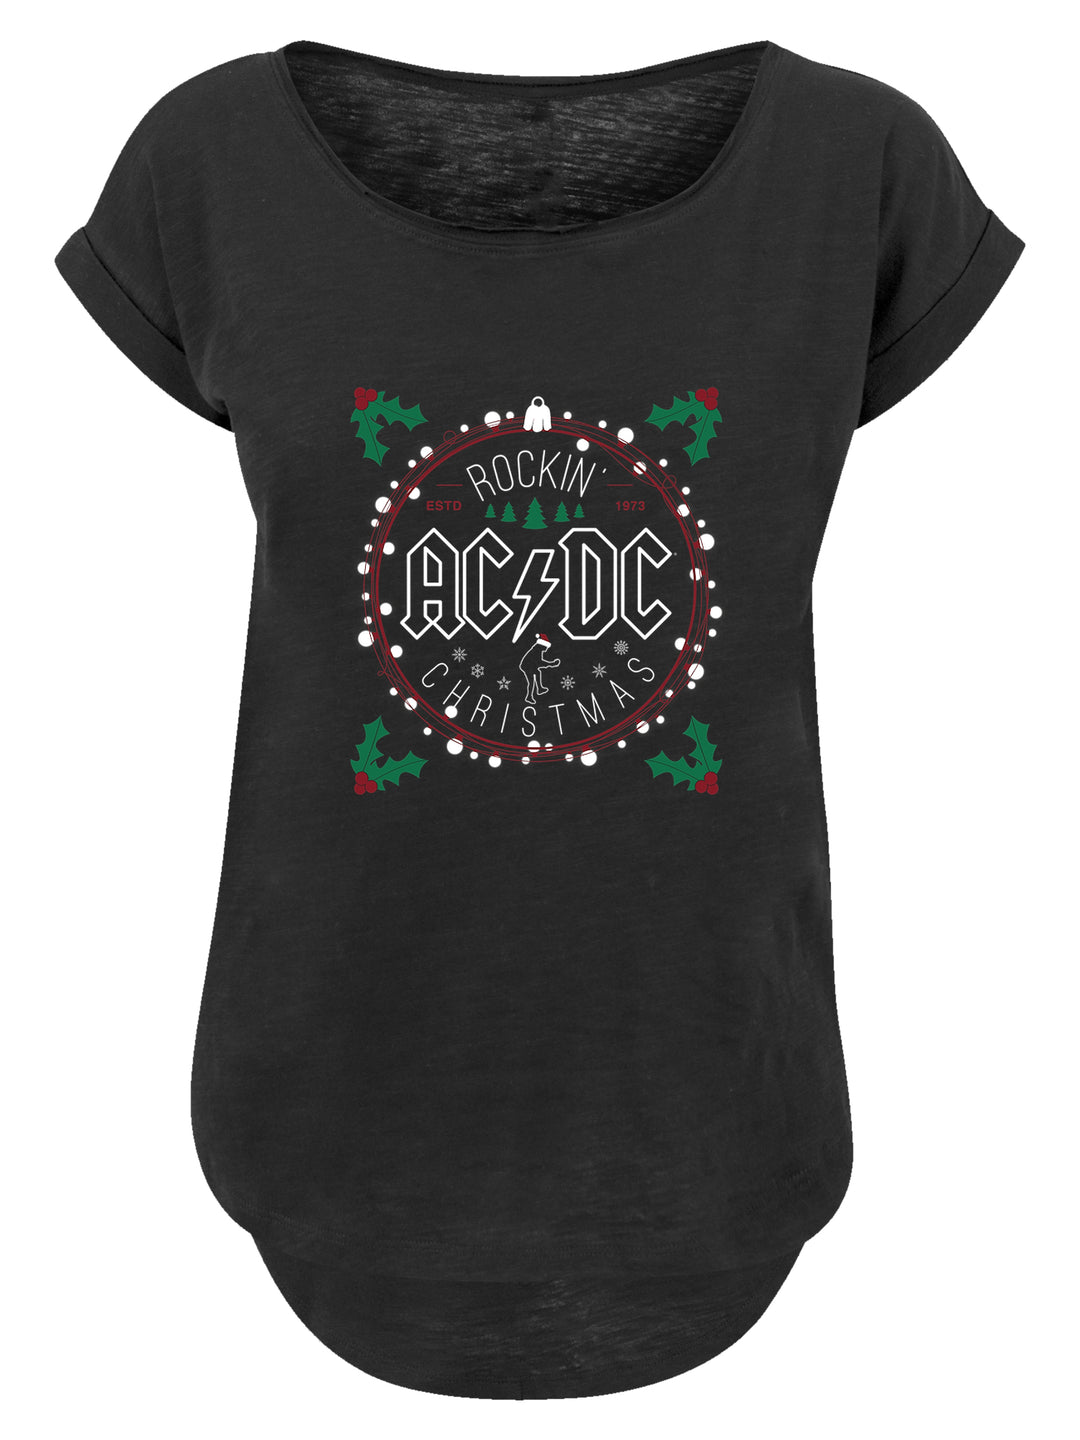 AC/DC Christmas Circle Ladies Long Slub Tee - Fuse Your Holiday Spirit with Rock 'n' Roll Panache